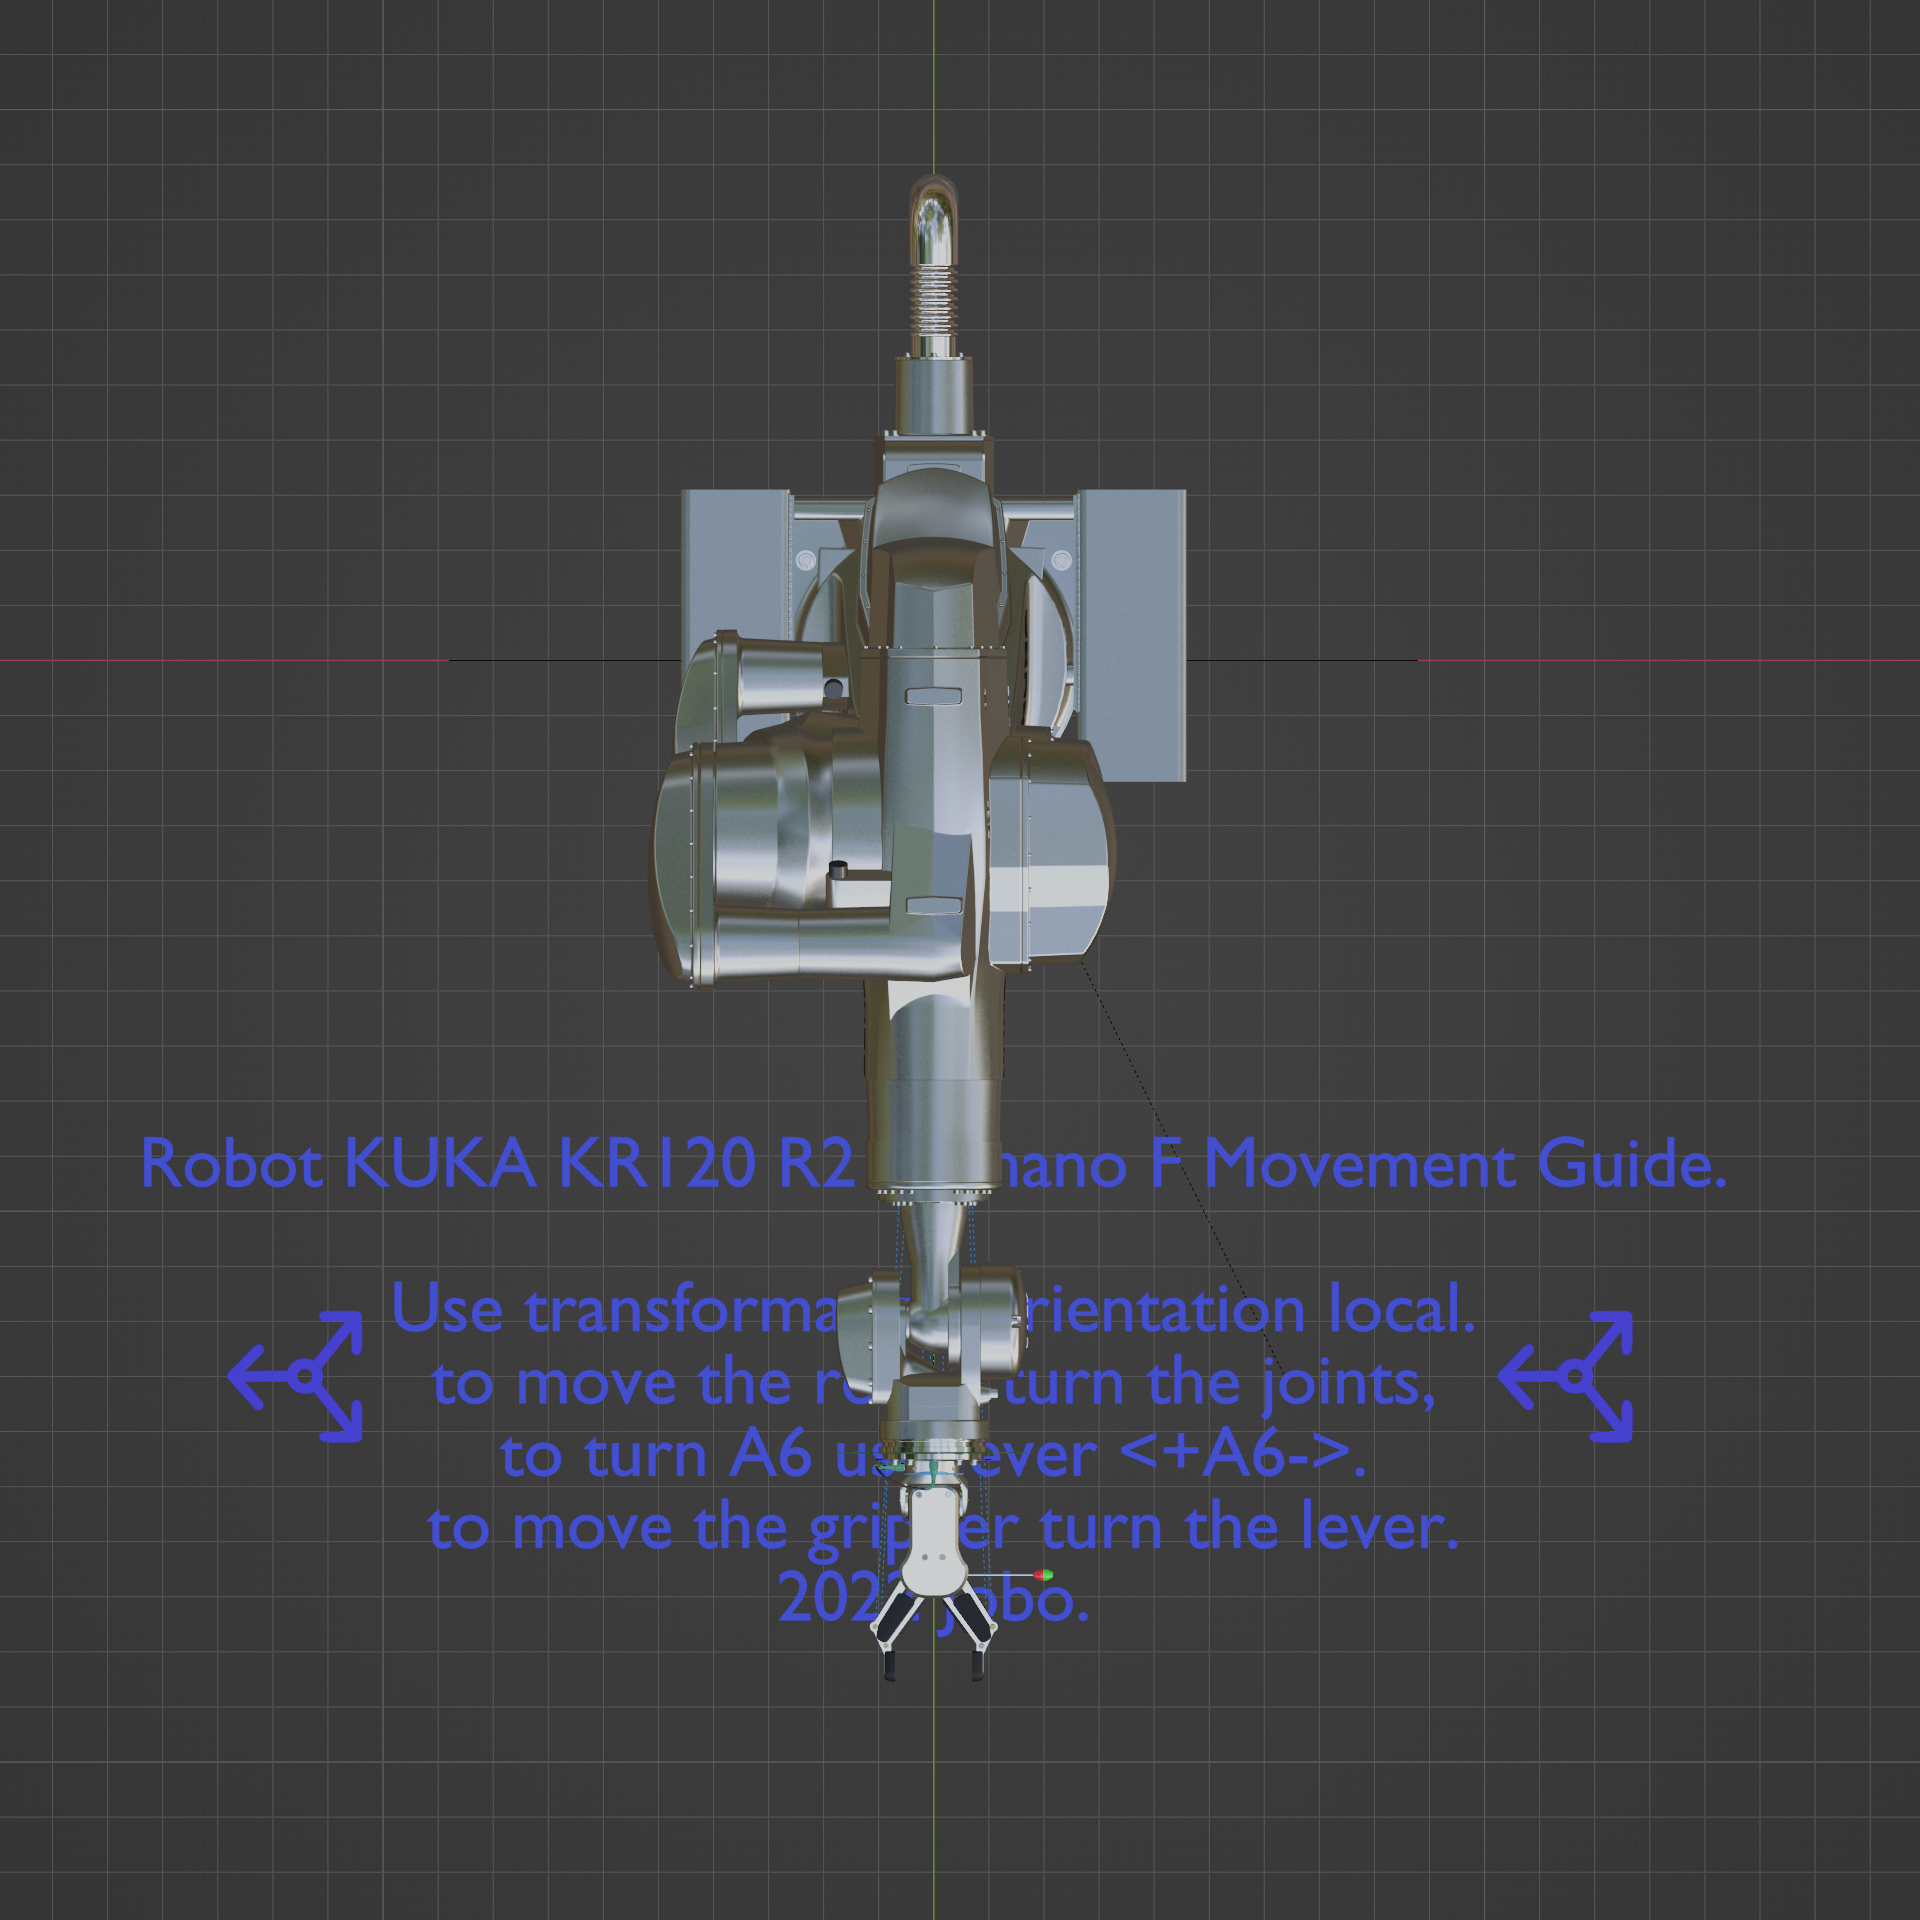 KUKA Robot KR 120 R2100 Nano F-G + ON ROBOT gripper preview image 4